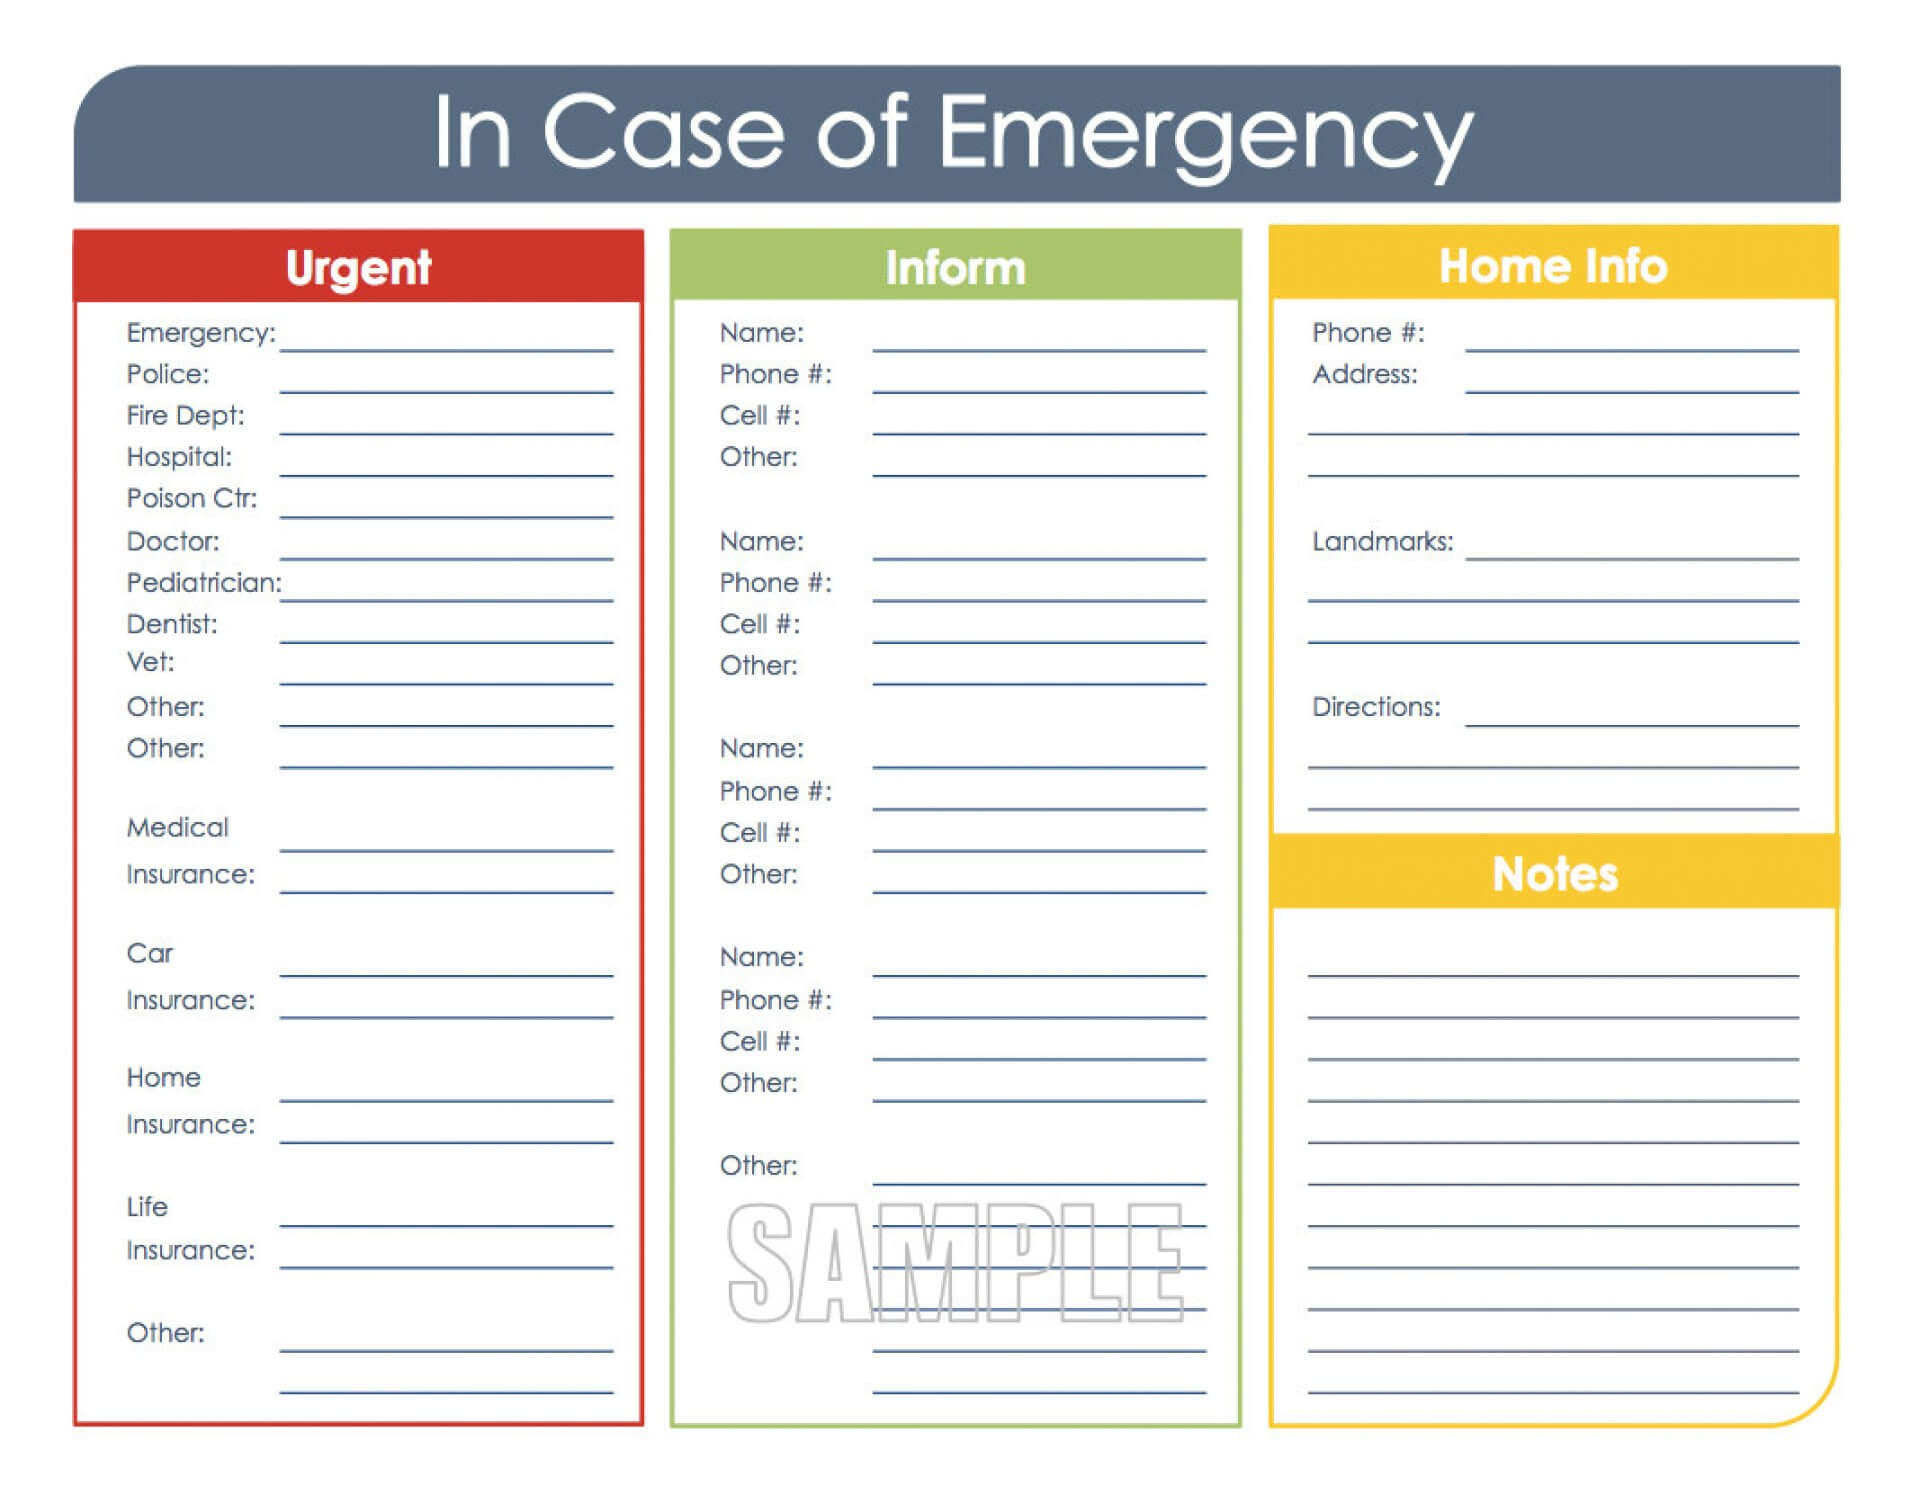 015 Template Ideas Emergency Contact Card Stunning Free Uk In In Case Of Emergency Card Template